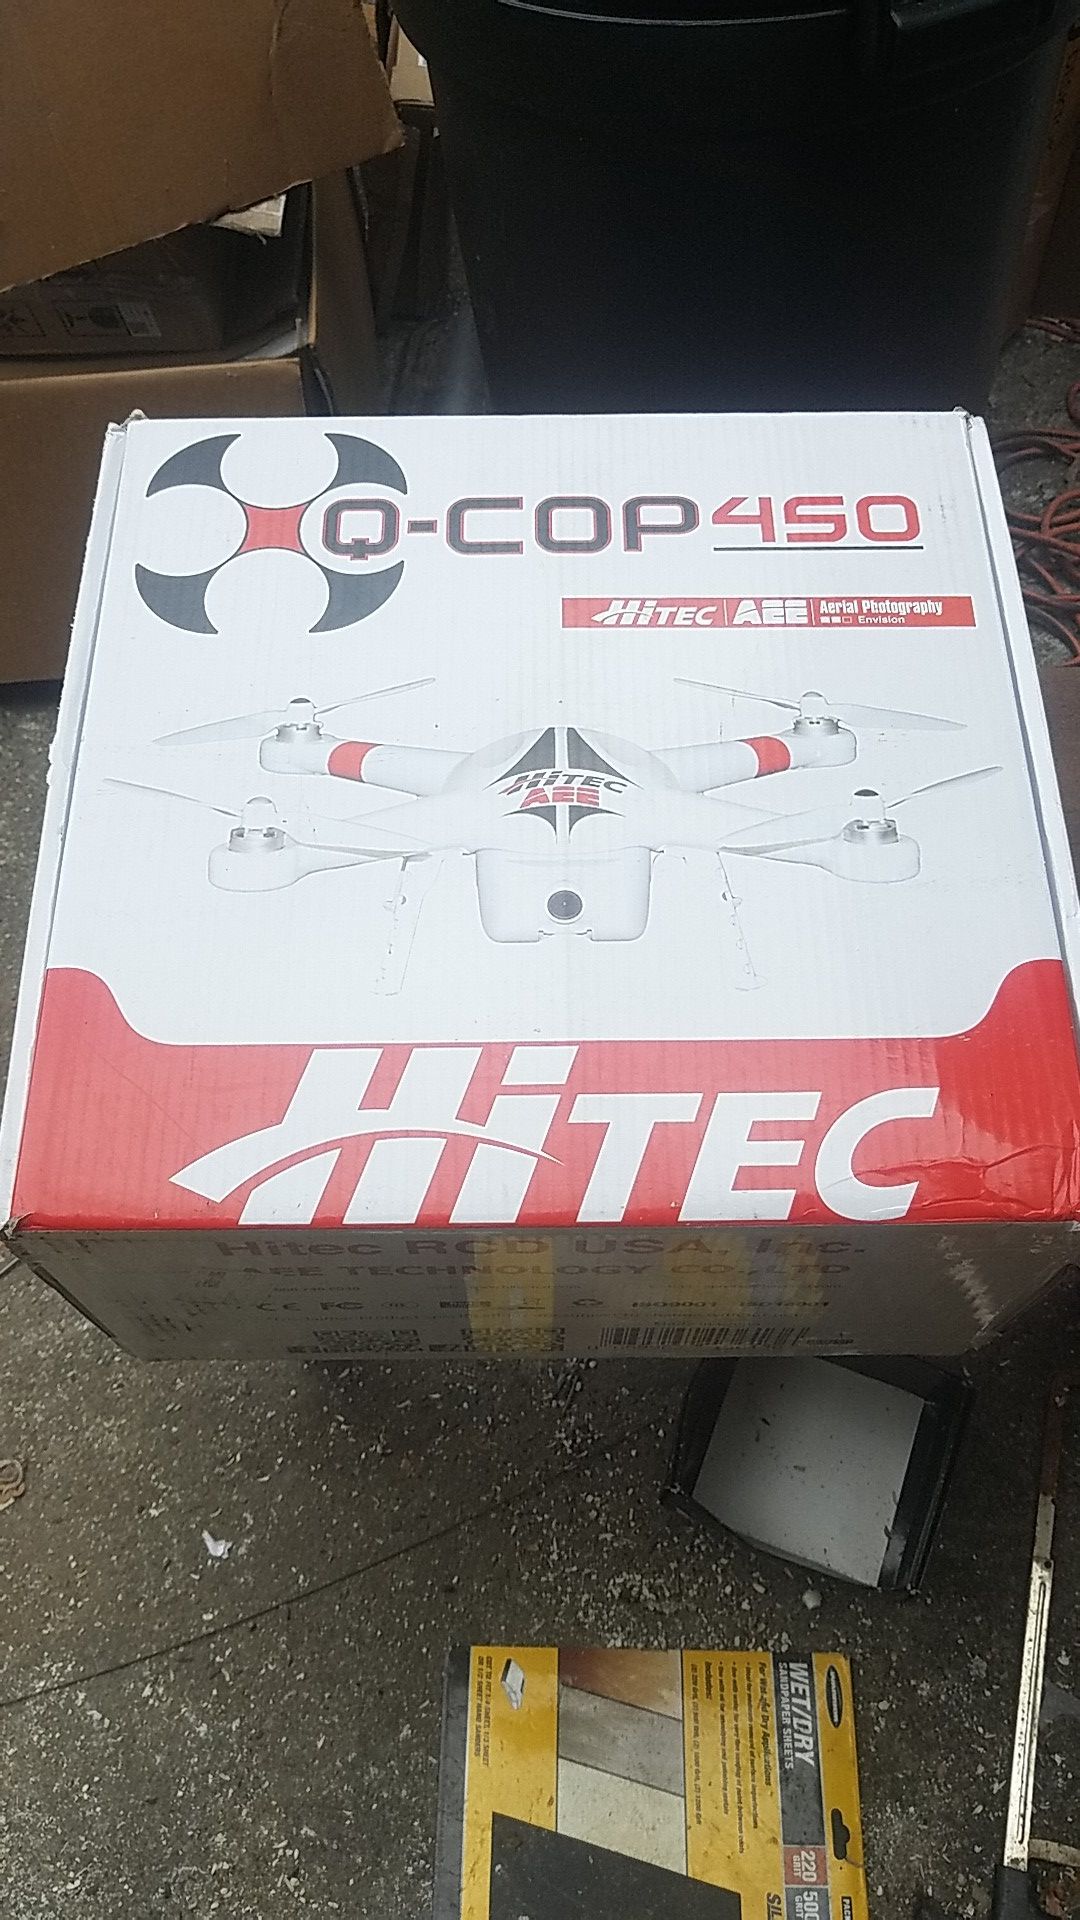 Q-cop450 drone